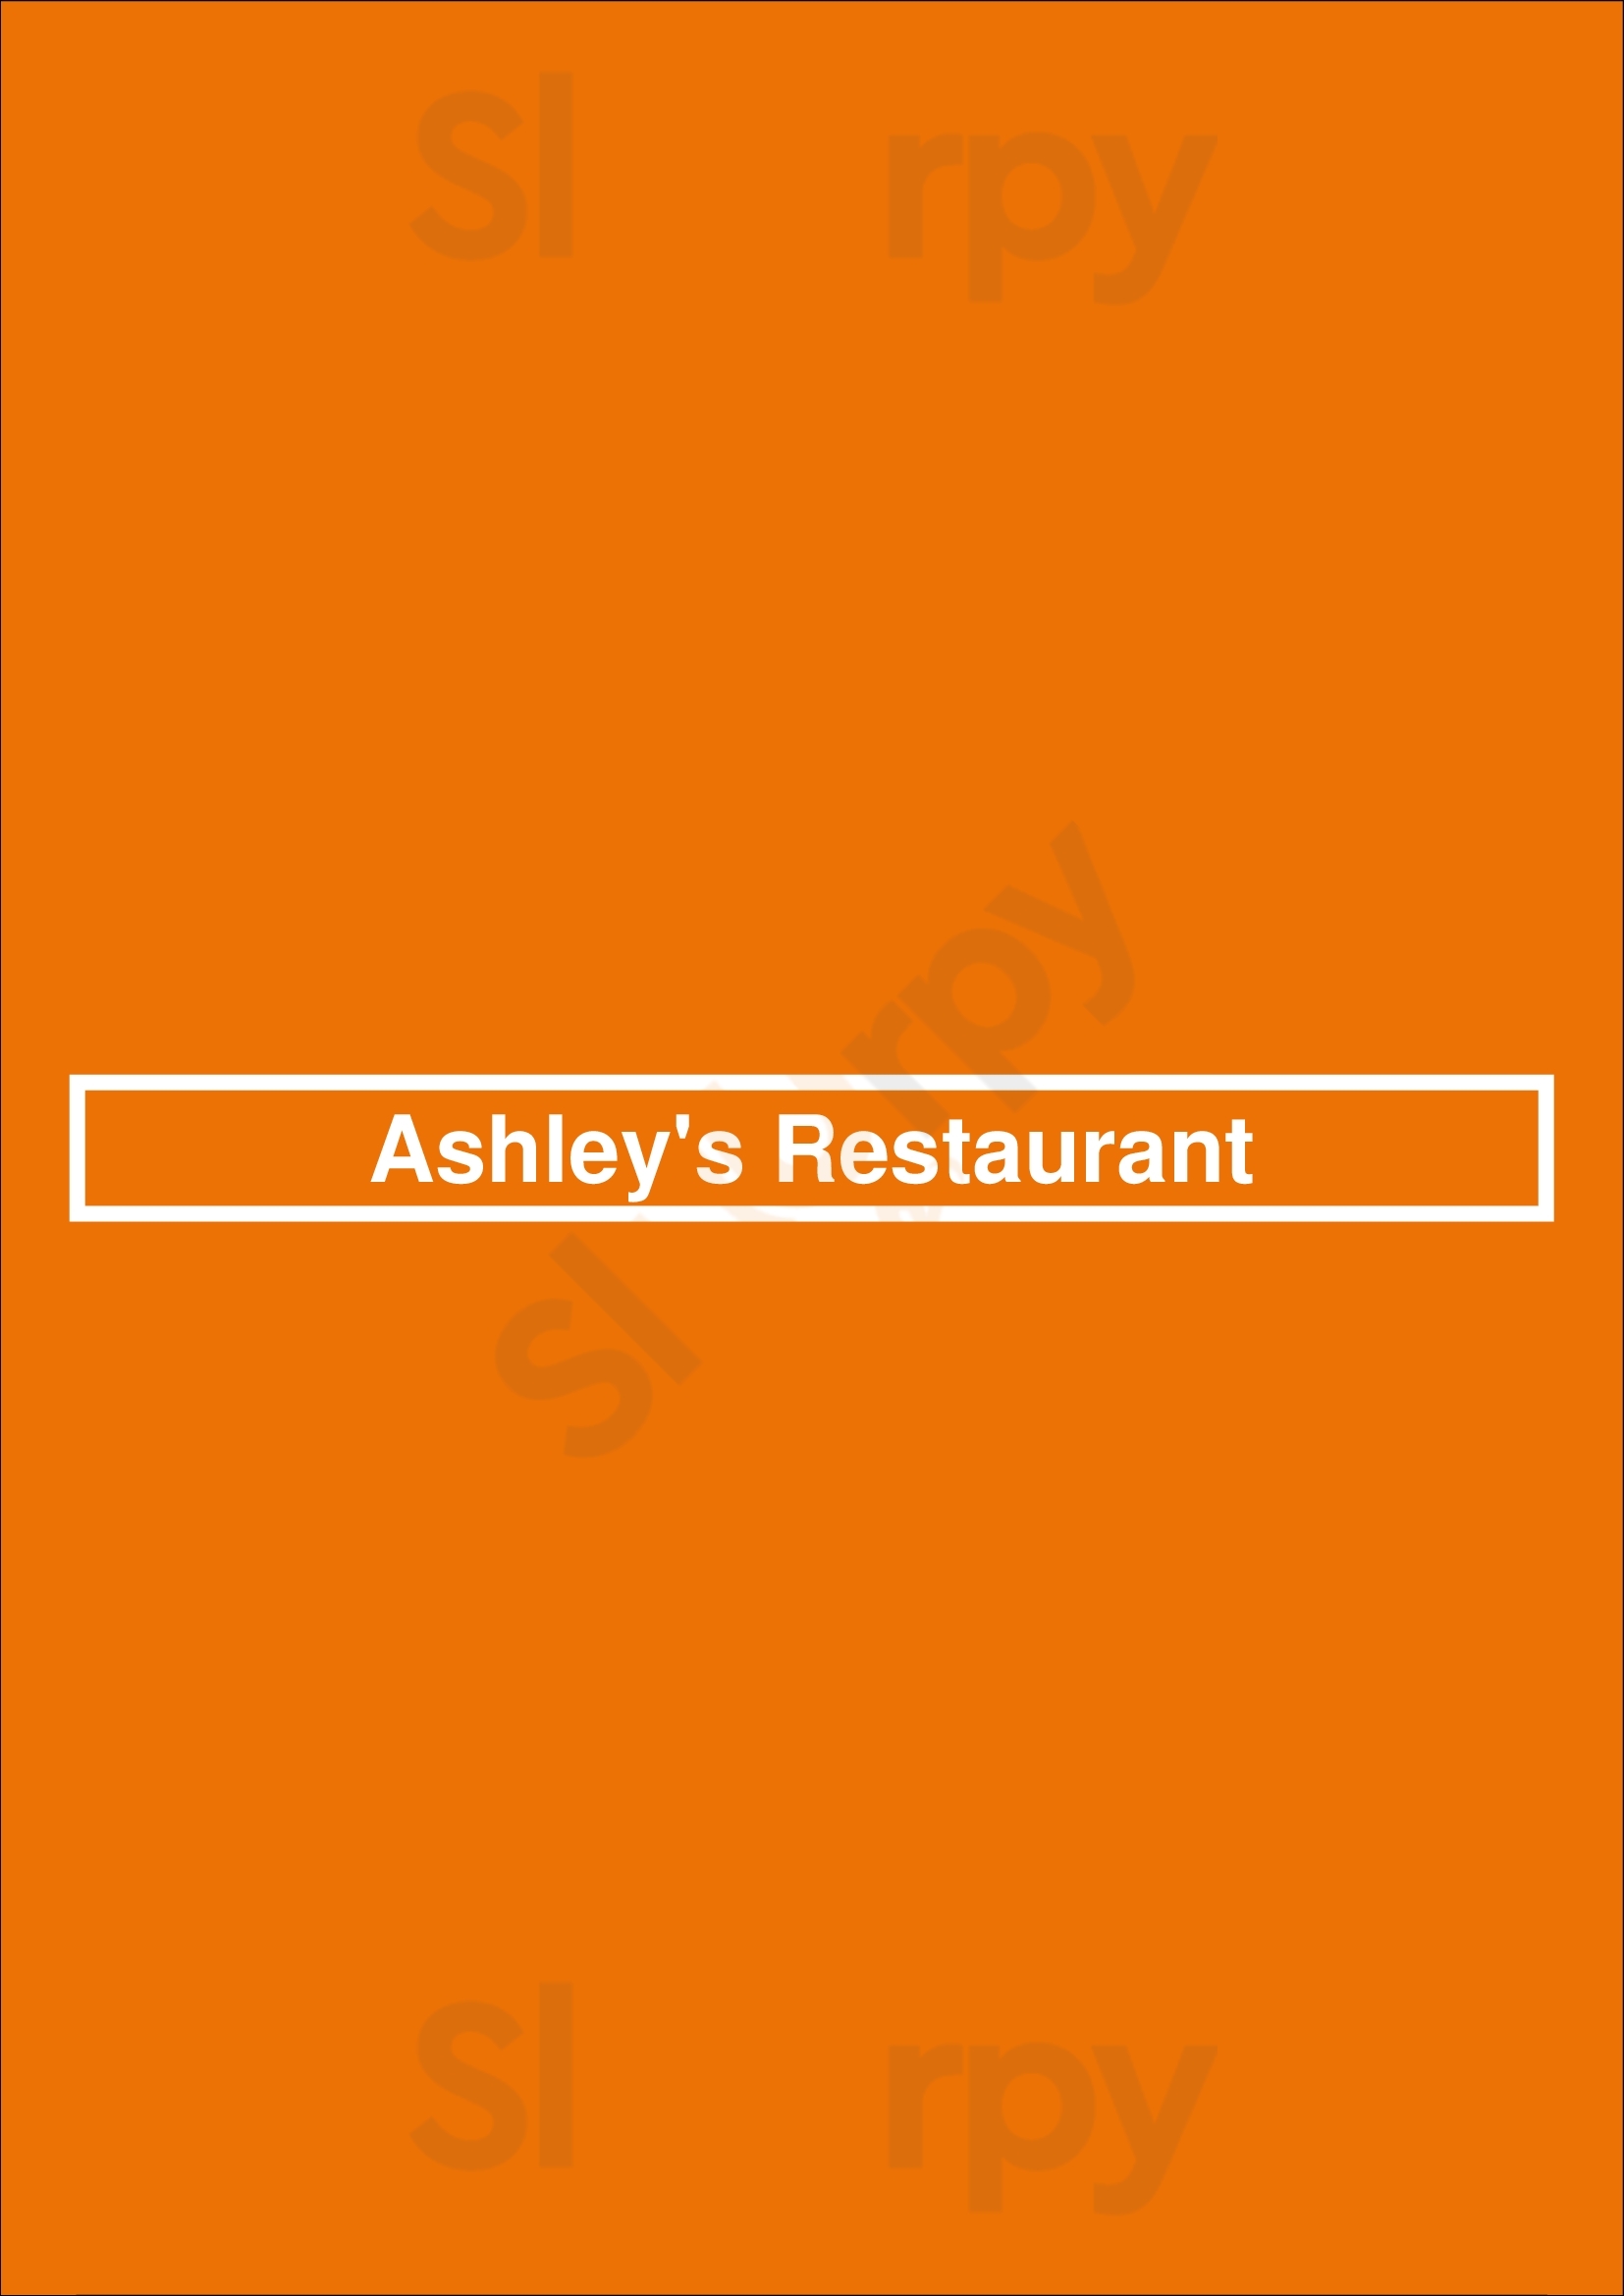 Ashley's Restaurant Düsseldorf Menu - 1